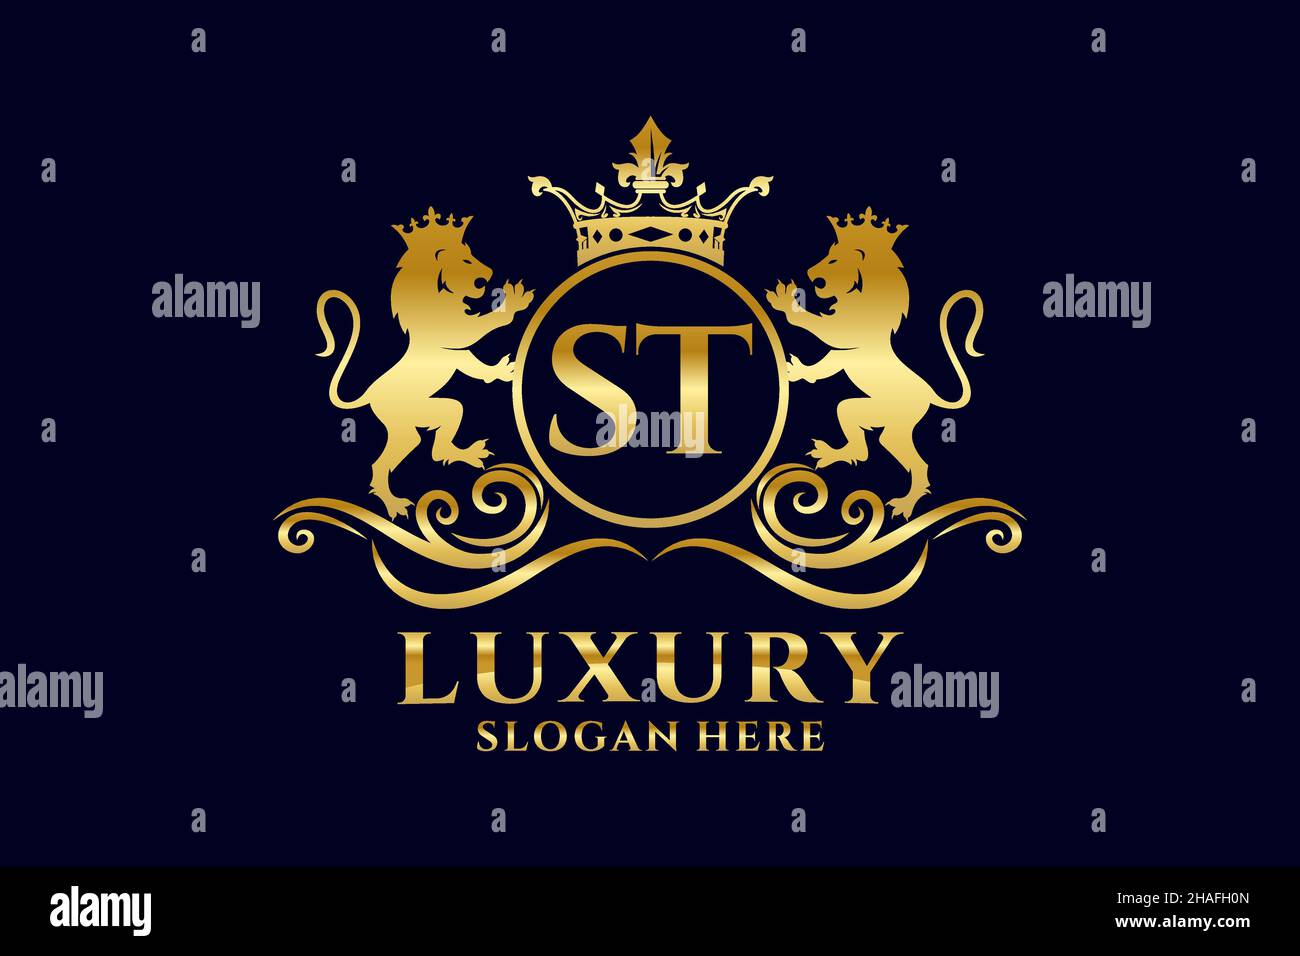 ST Letter Lion Royal Luxury Logo-Vorlage in Vektorgrafik für luxuriöse Branding-Projekte und andere Vektorgrafik. Stock Vektor